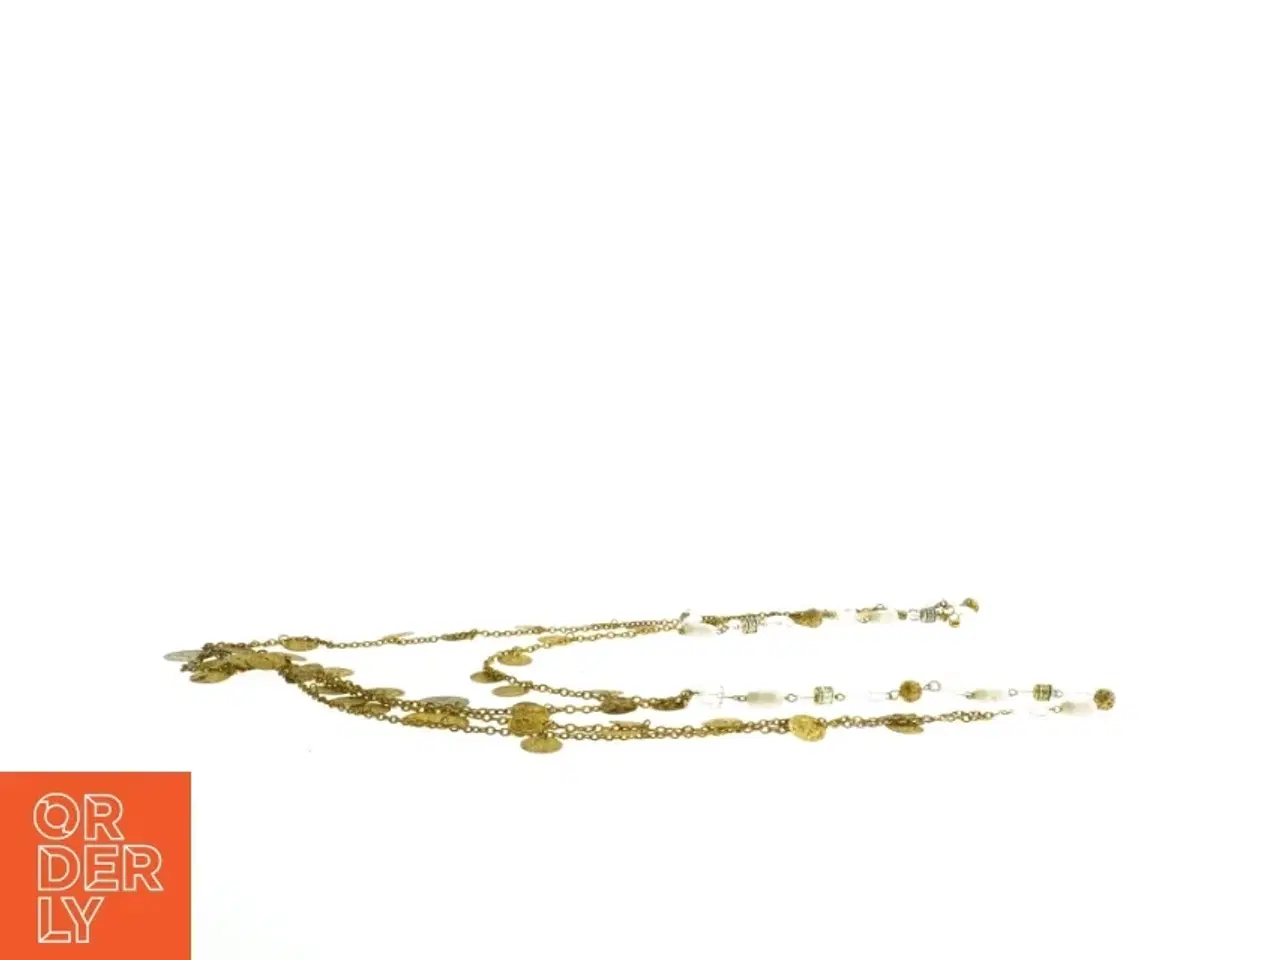 Billede 2 - Perlekæde med guld detaljer (str. 83 cm)